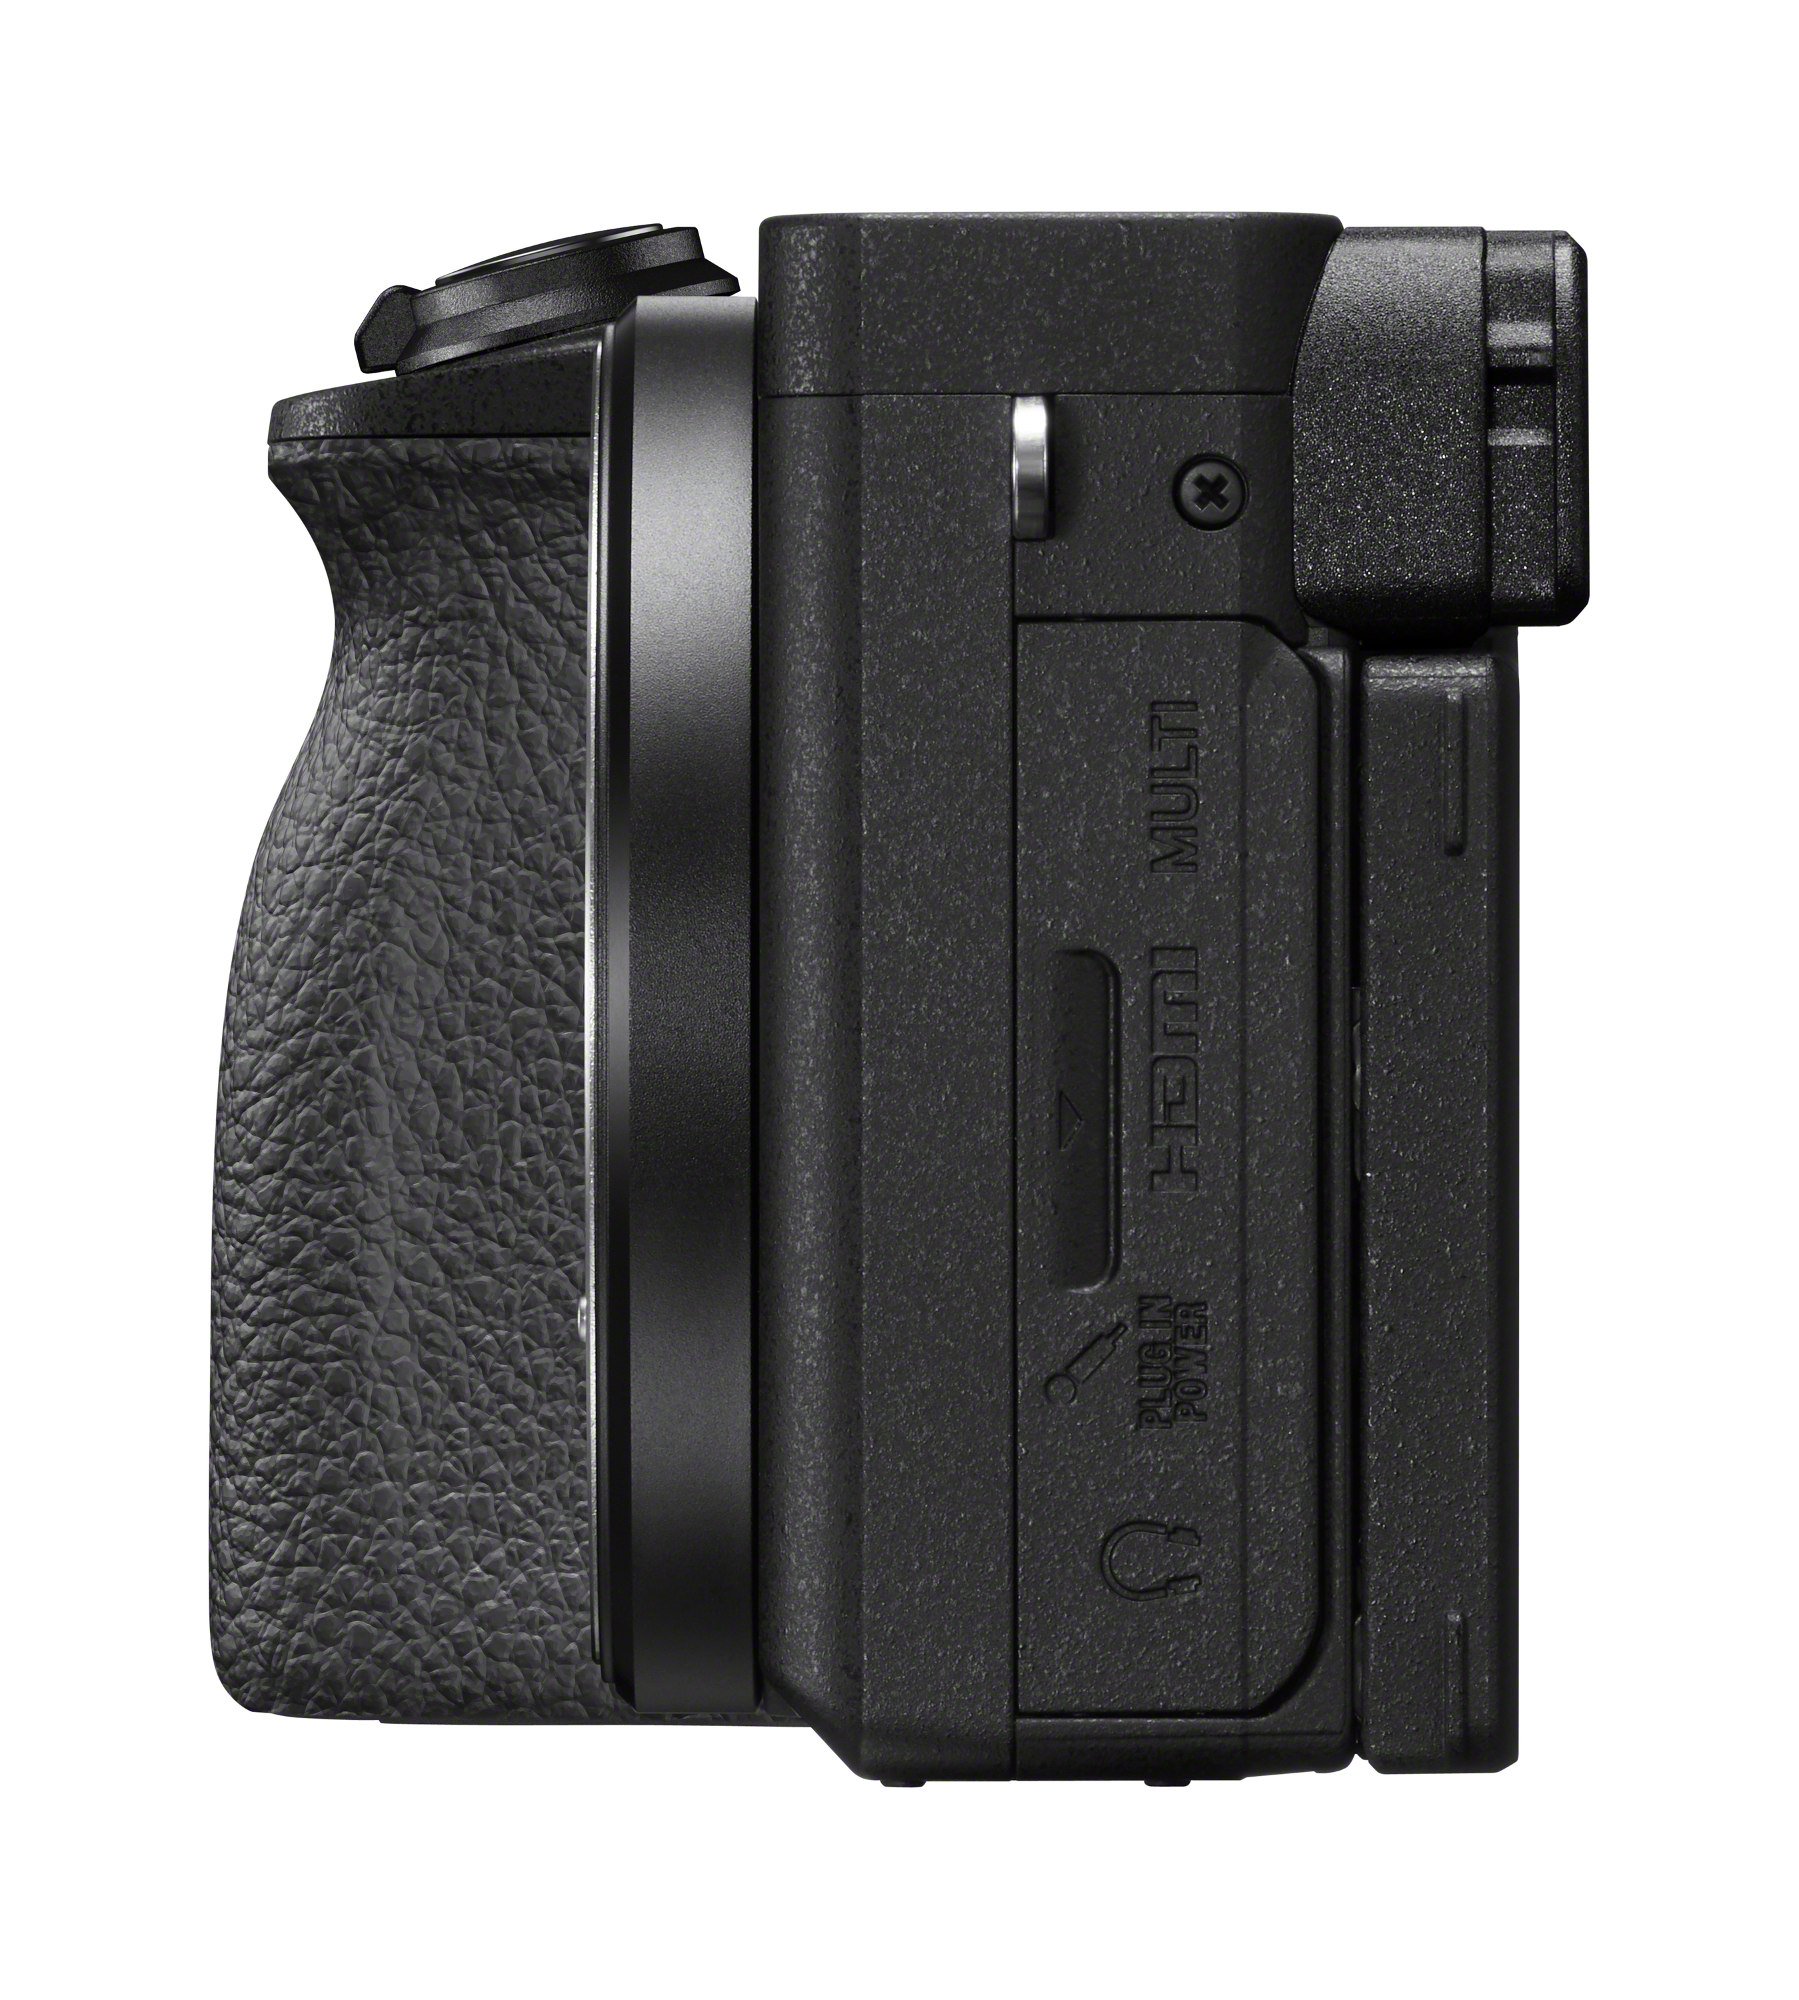 Camara Digital Mirrorless Sony Alpha A6600 4k Wifi/nfc Body - SONY